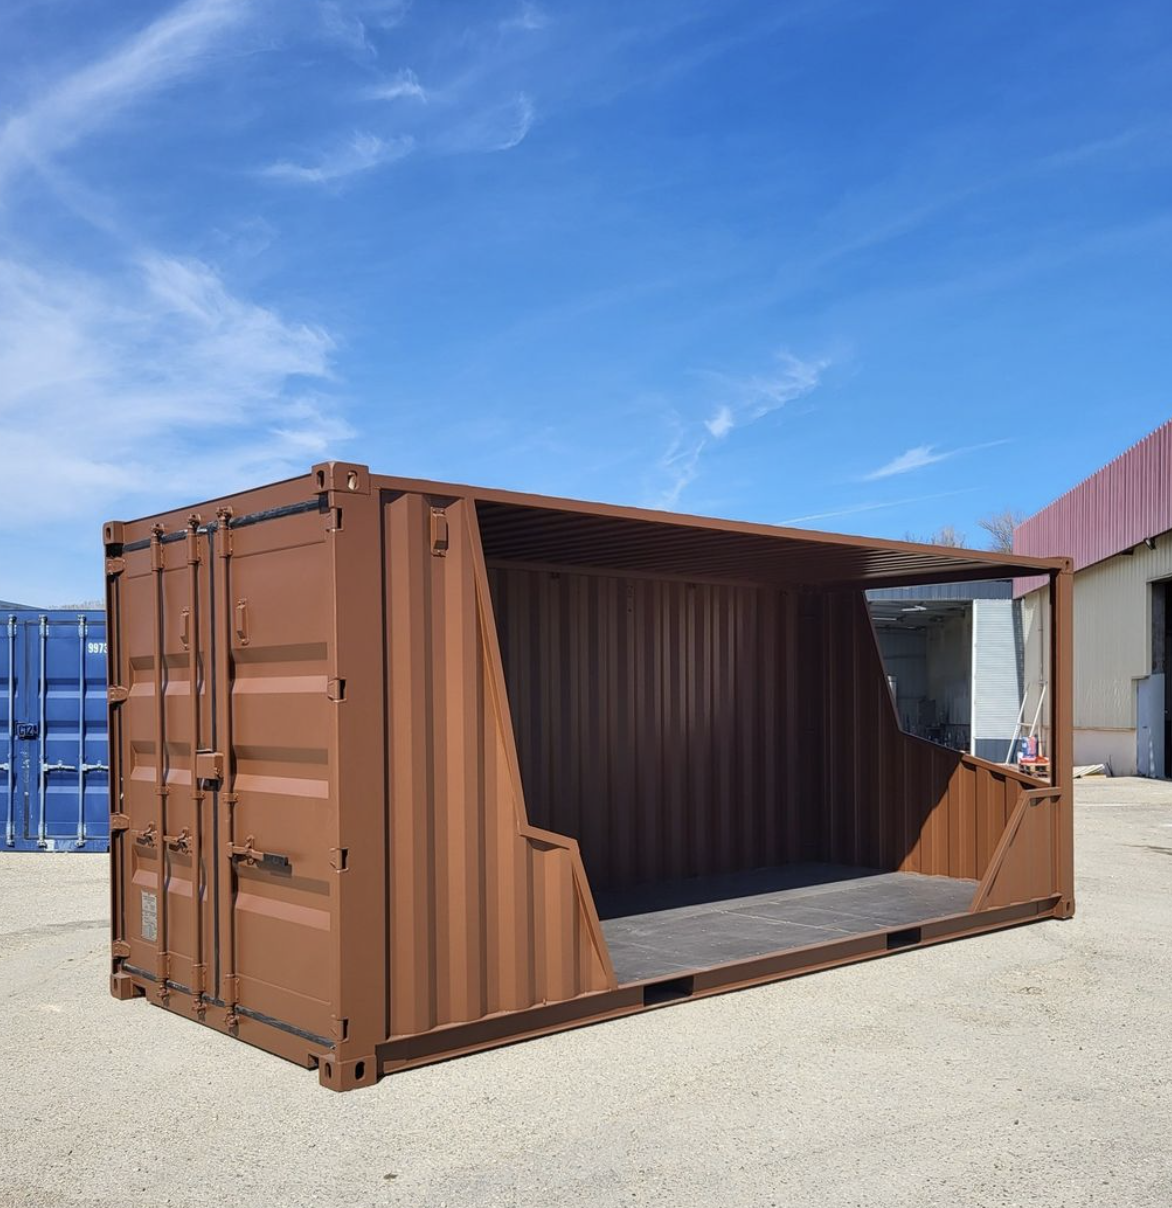 Bulle de vente en container-eurobox-transformation de container- container sur-mesure- containers recyclés- conteneur amménagé